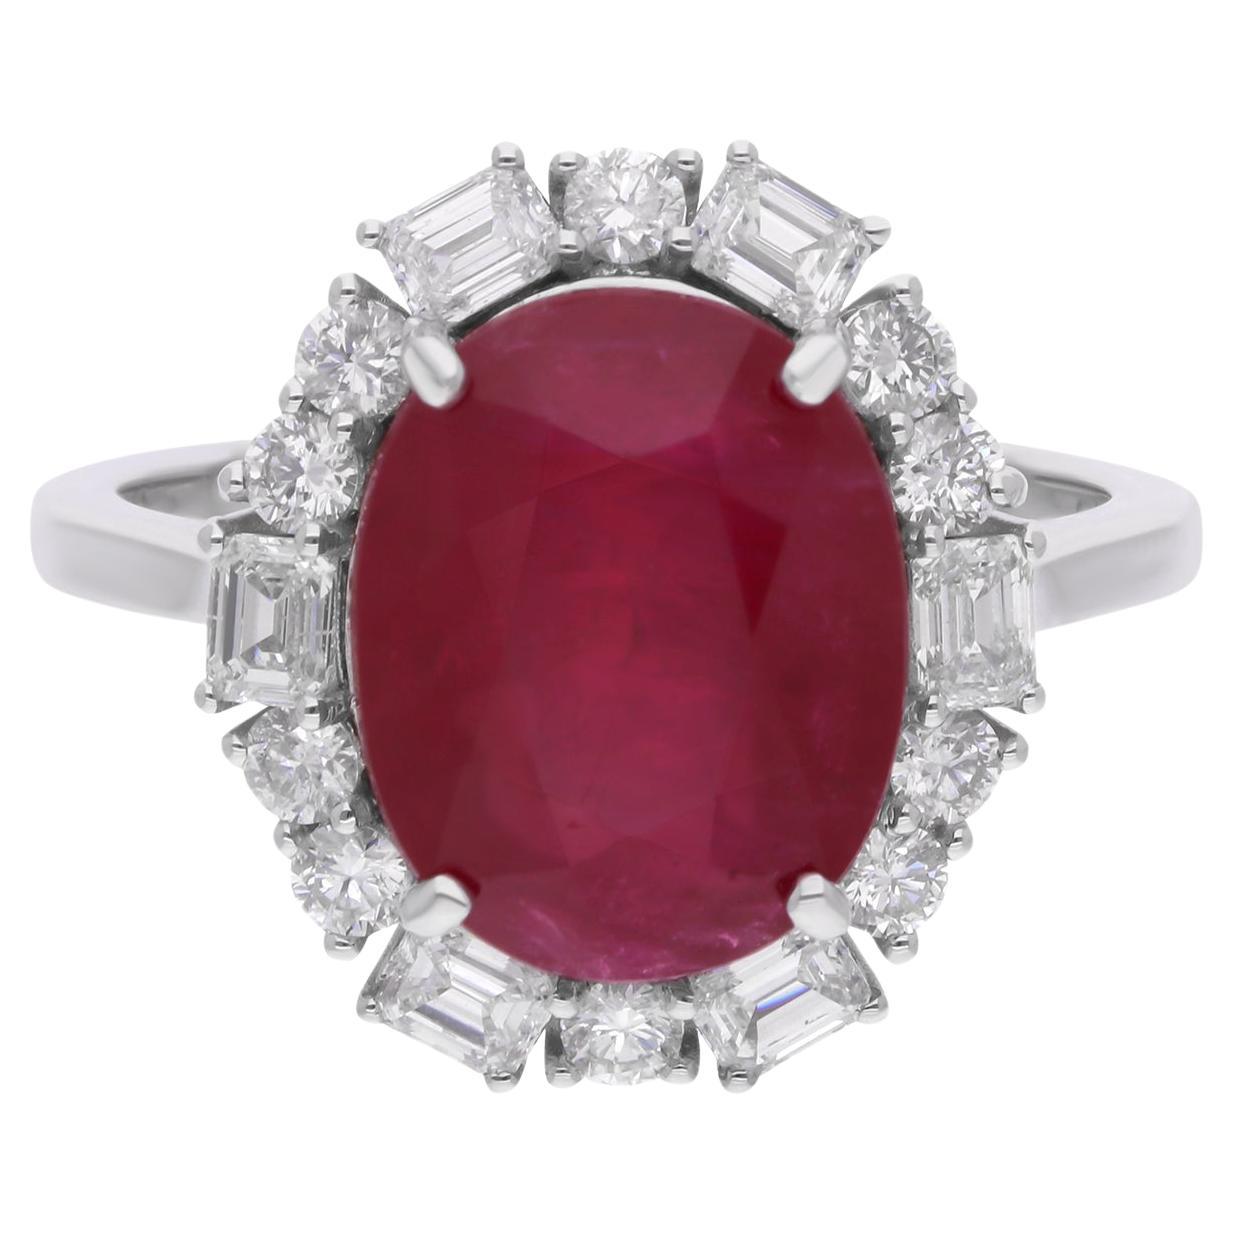 Oval Ruby Gemstone Cocktail Ring Diamond 18 Karat White Gold Handmade Jewelry For Sale